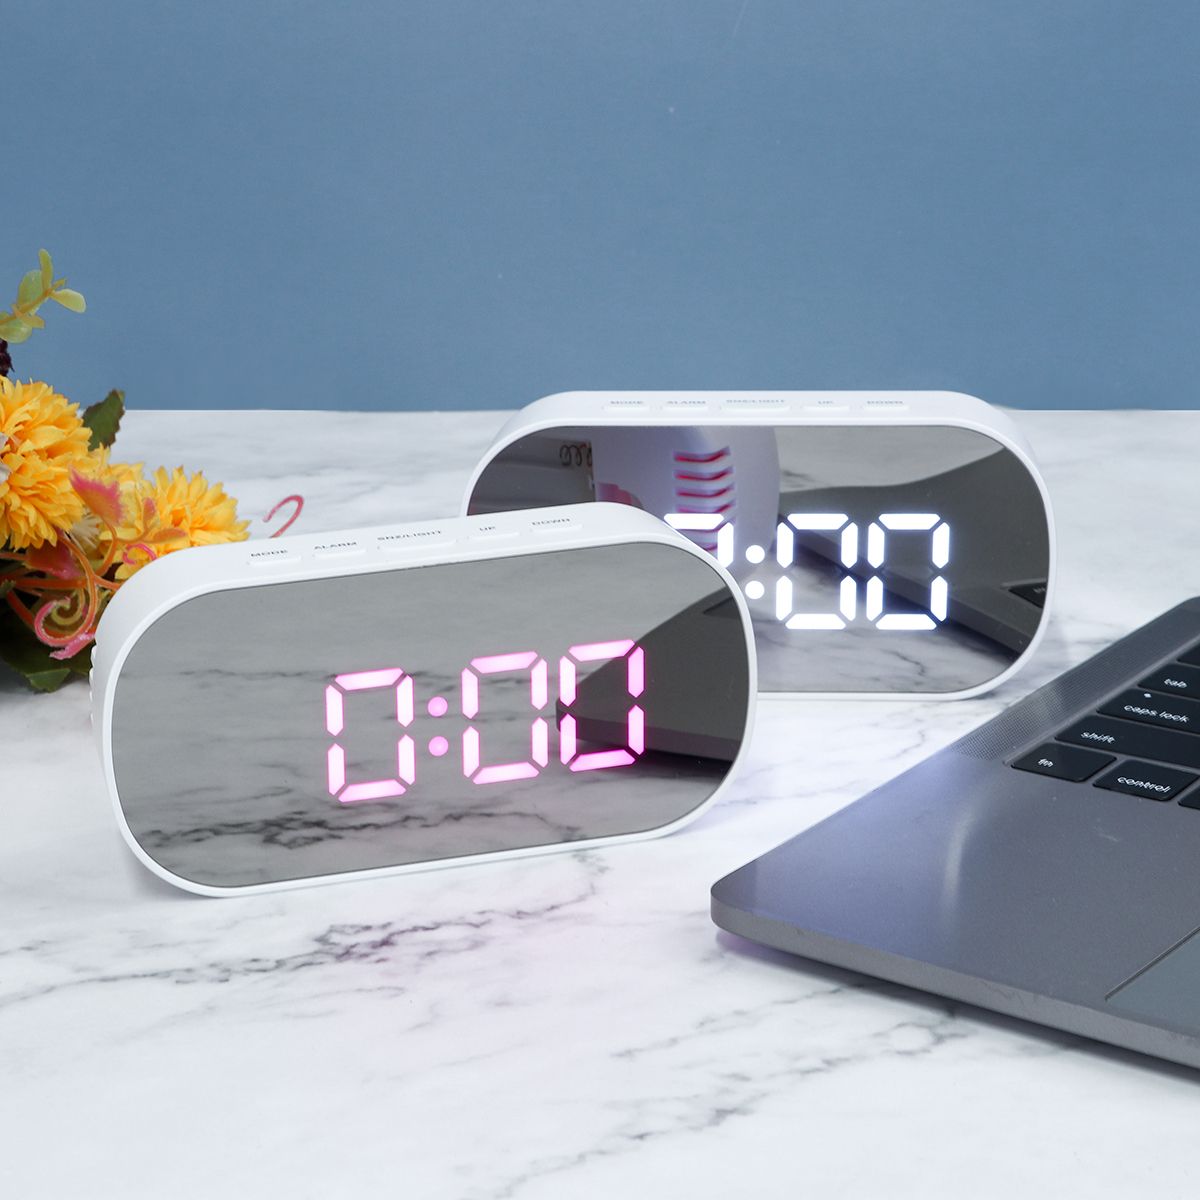 LED-Alarm-Clock-Mirror-Digital-Table-Display-Temperature-Snooze-USB-Charging-wondergood-1639016